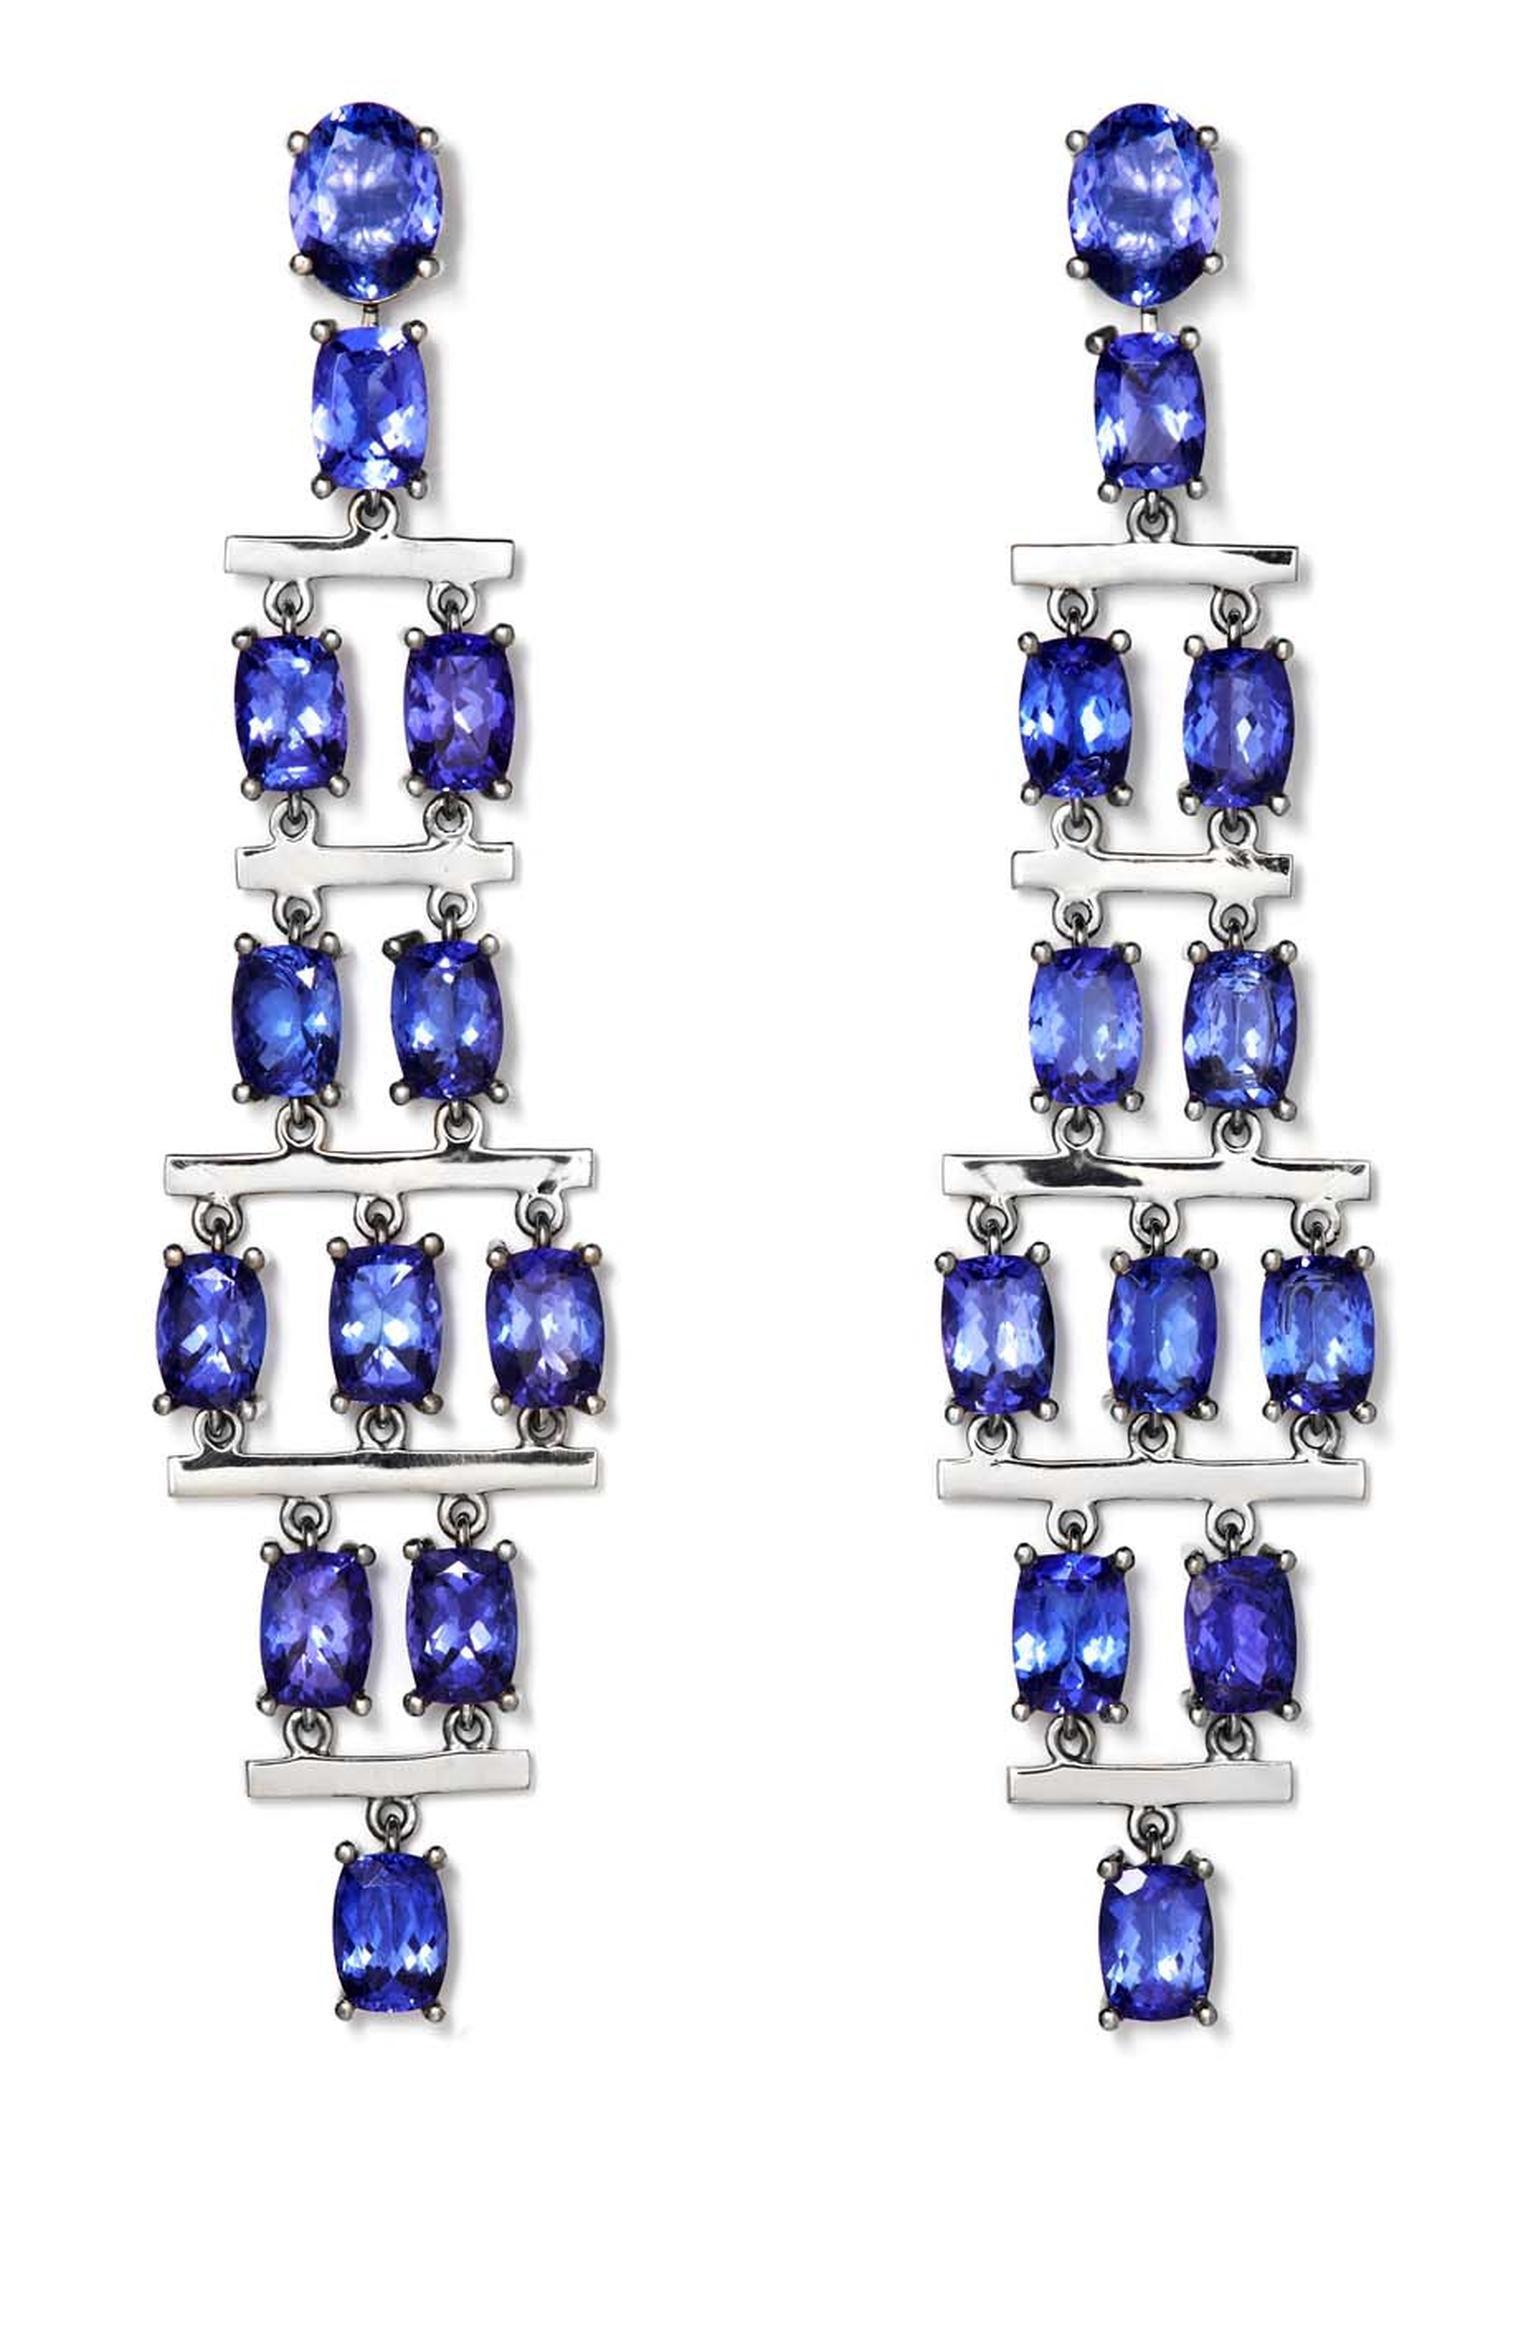 CADA Greta earrings featuring 24.86ct of tanzanite.